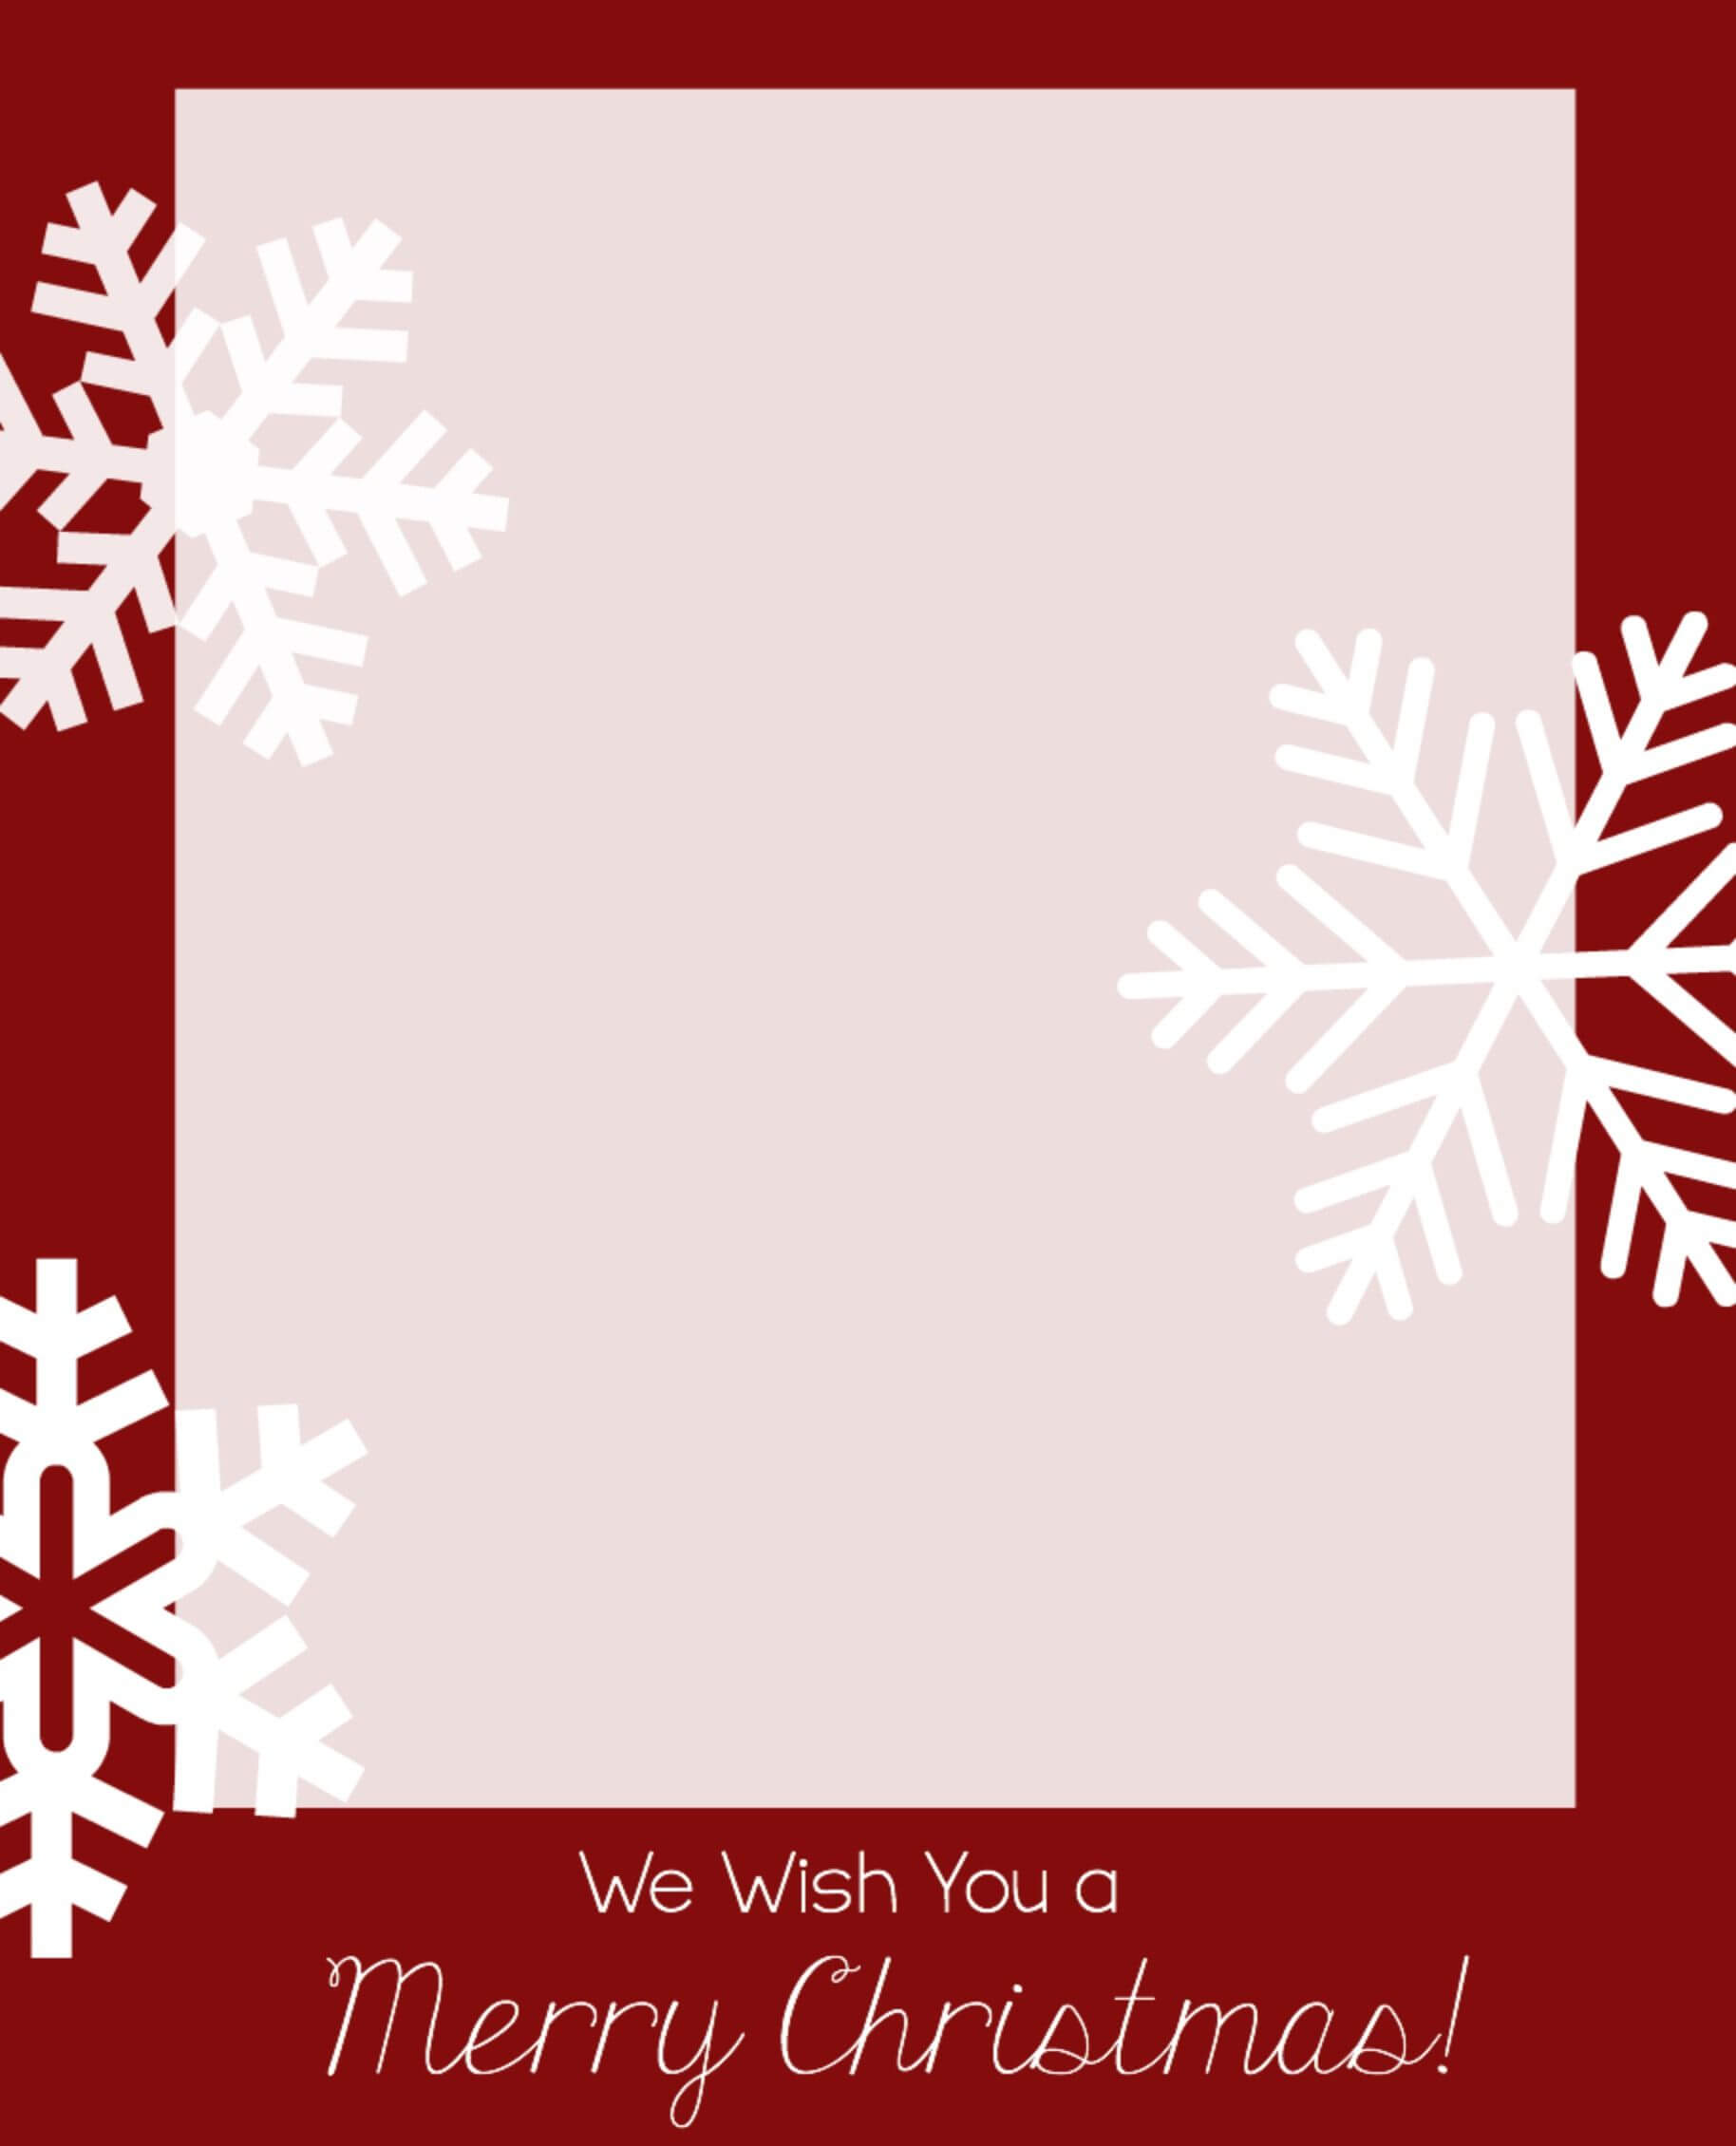 Free Christmas Card Templates | Christmas Photo Card Within Printable Holiday Card Templates